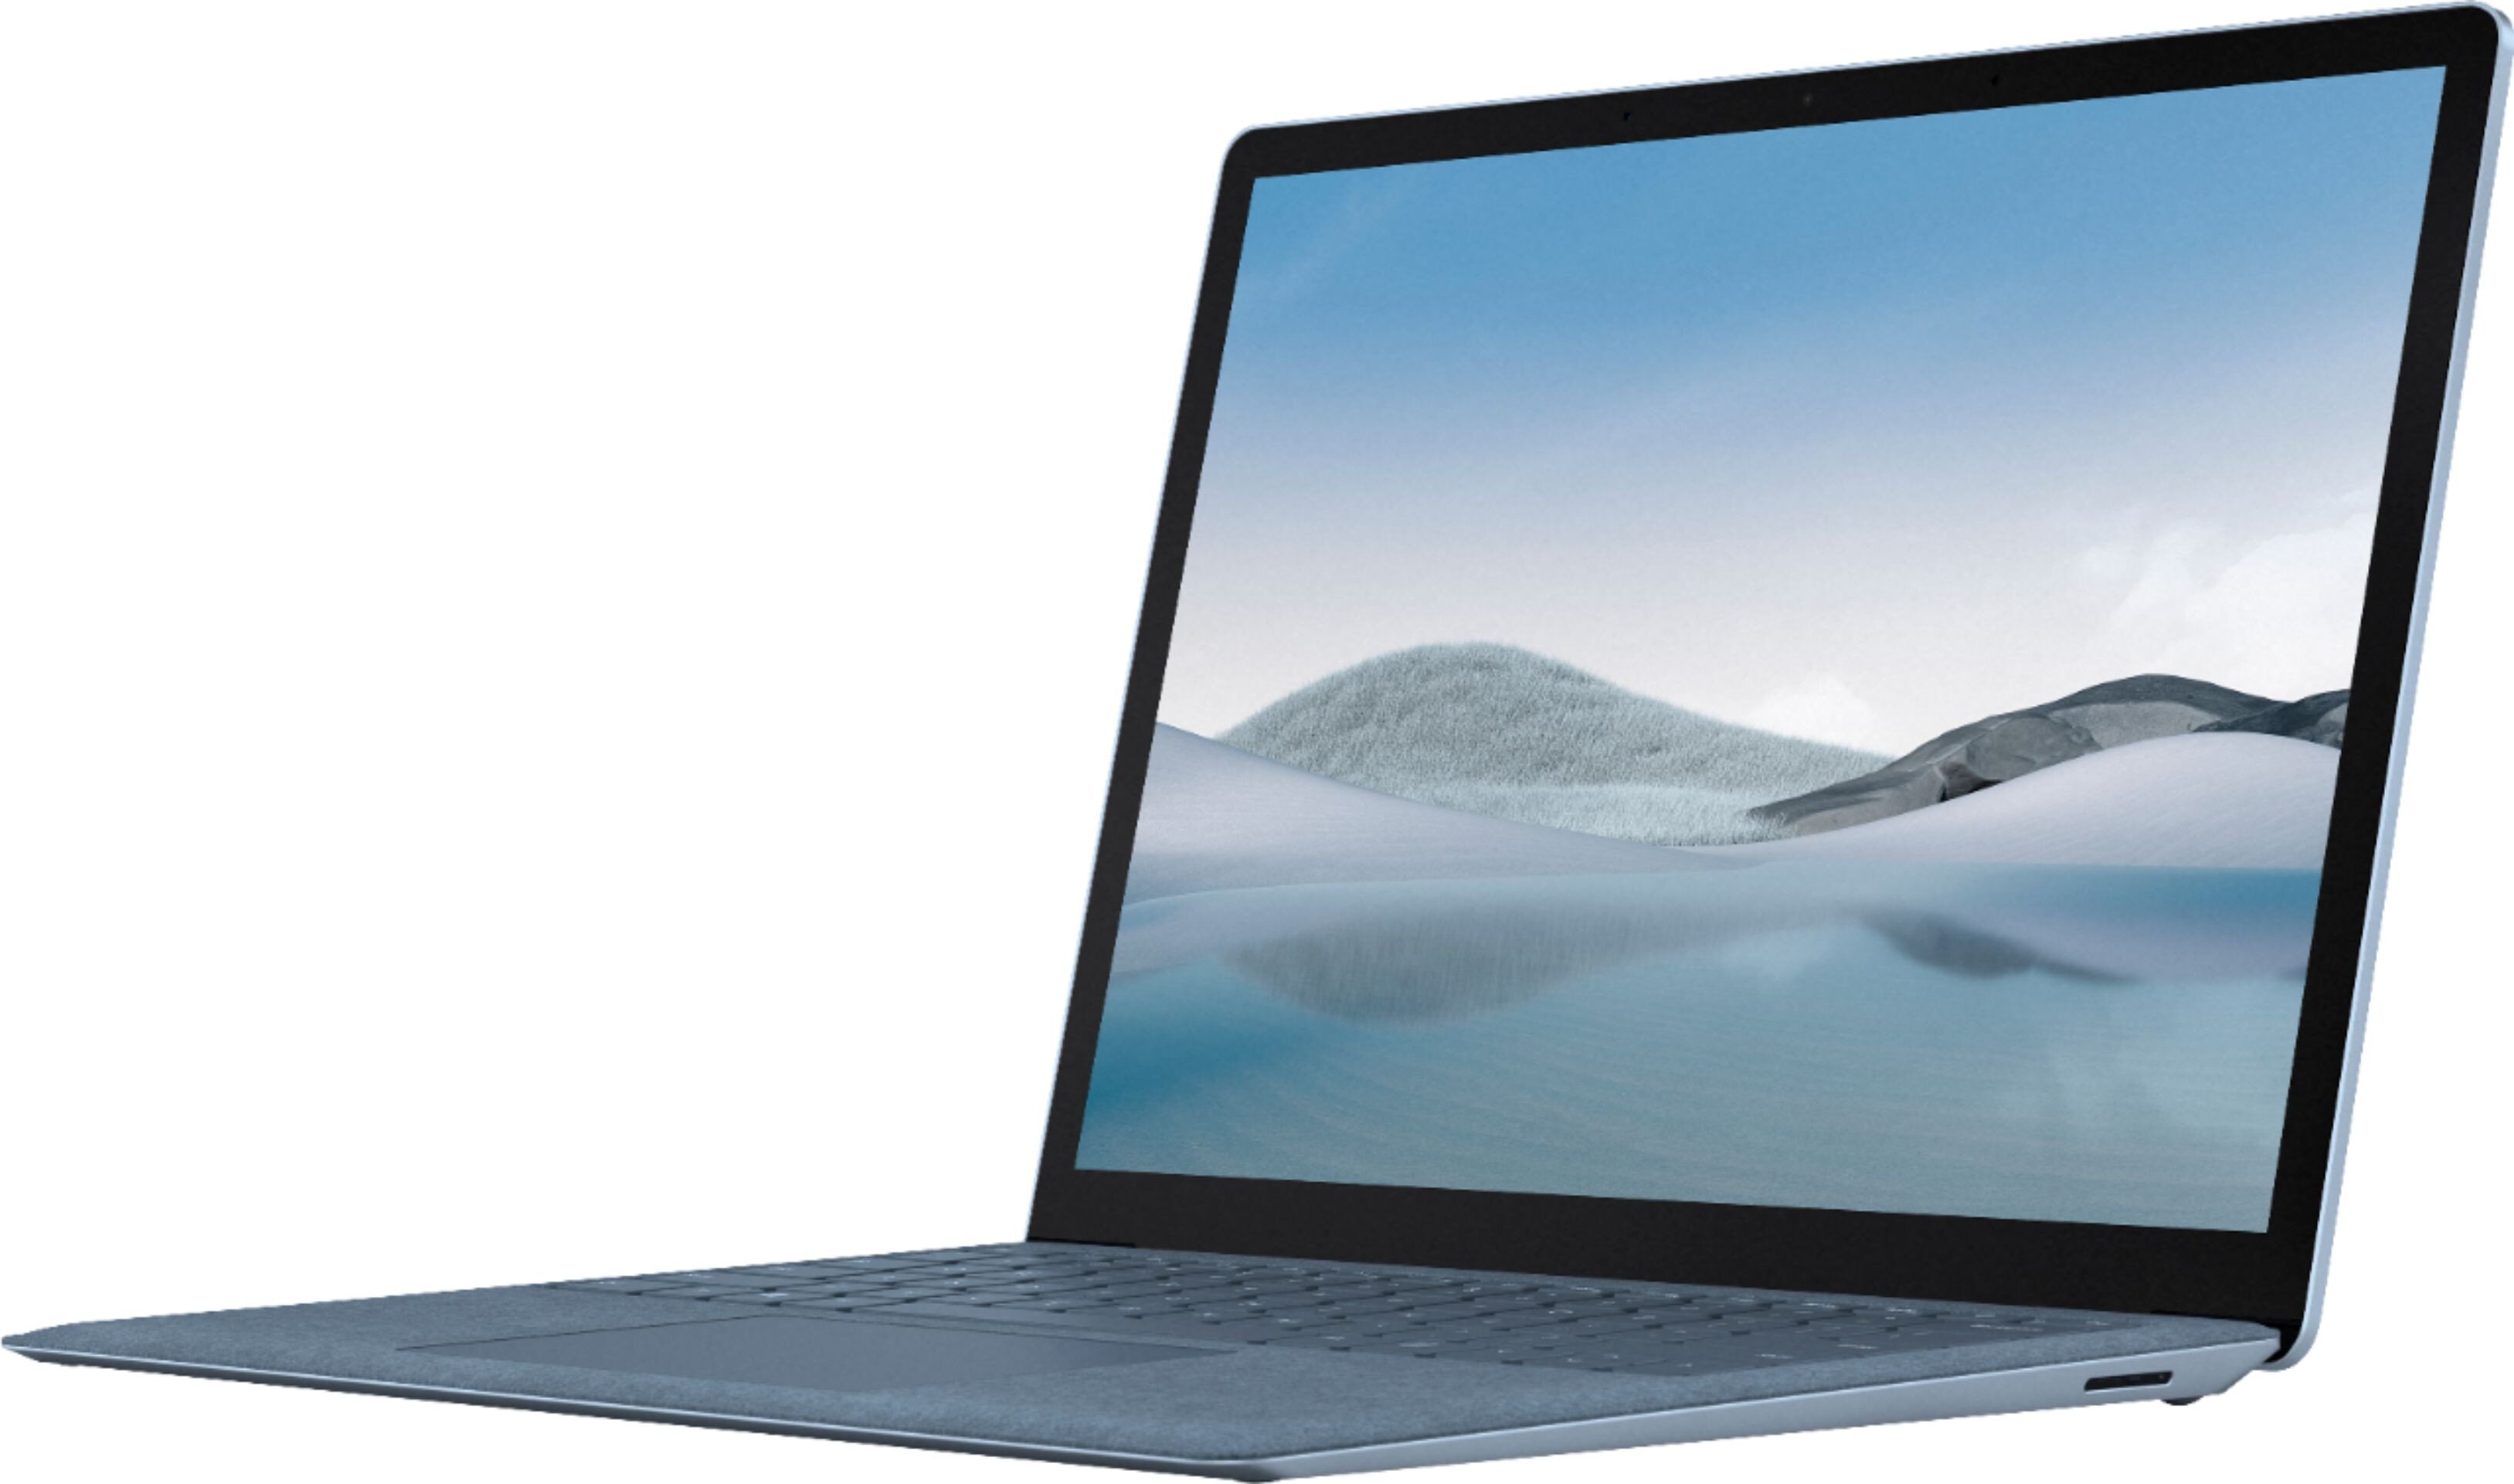 Buy Microsoft Surface Laptop 4 online in Pakistan - Tejar.pk